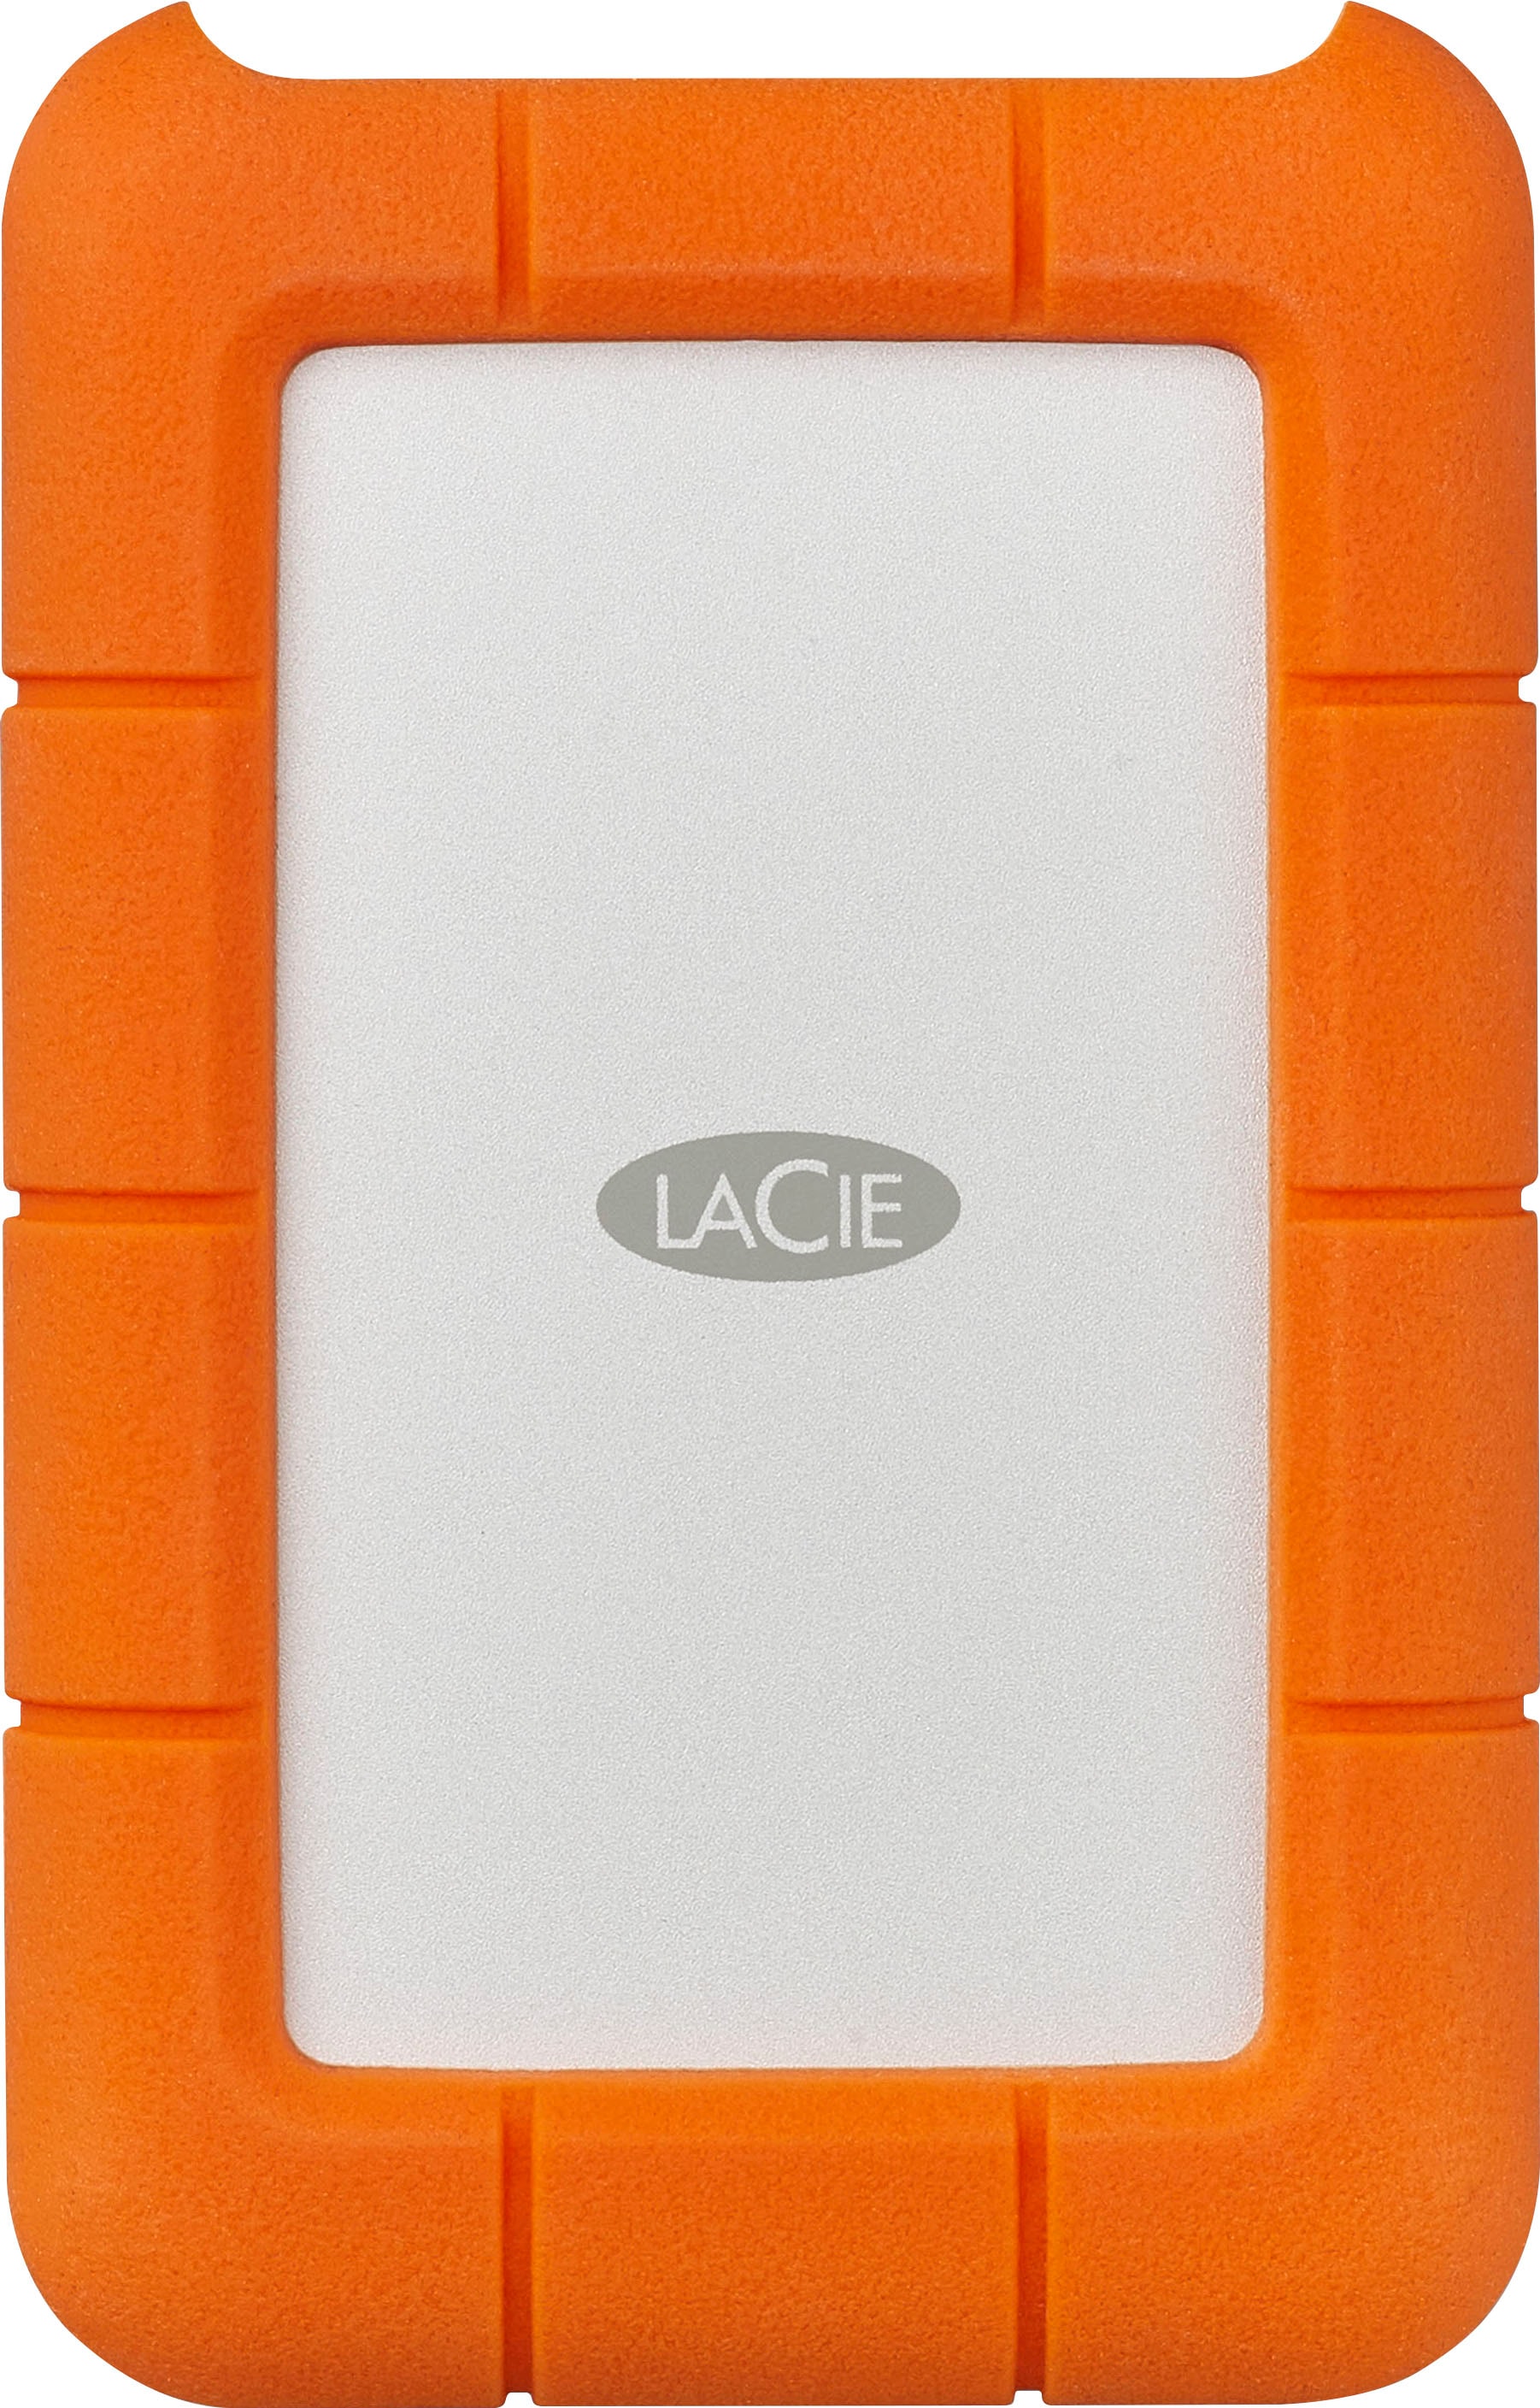 LaCie externe HDD-Festplatte »Rugged USB-C«, Anschluss USB-C-USB 3.0